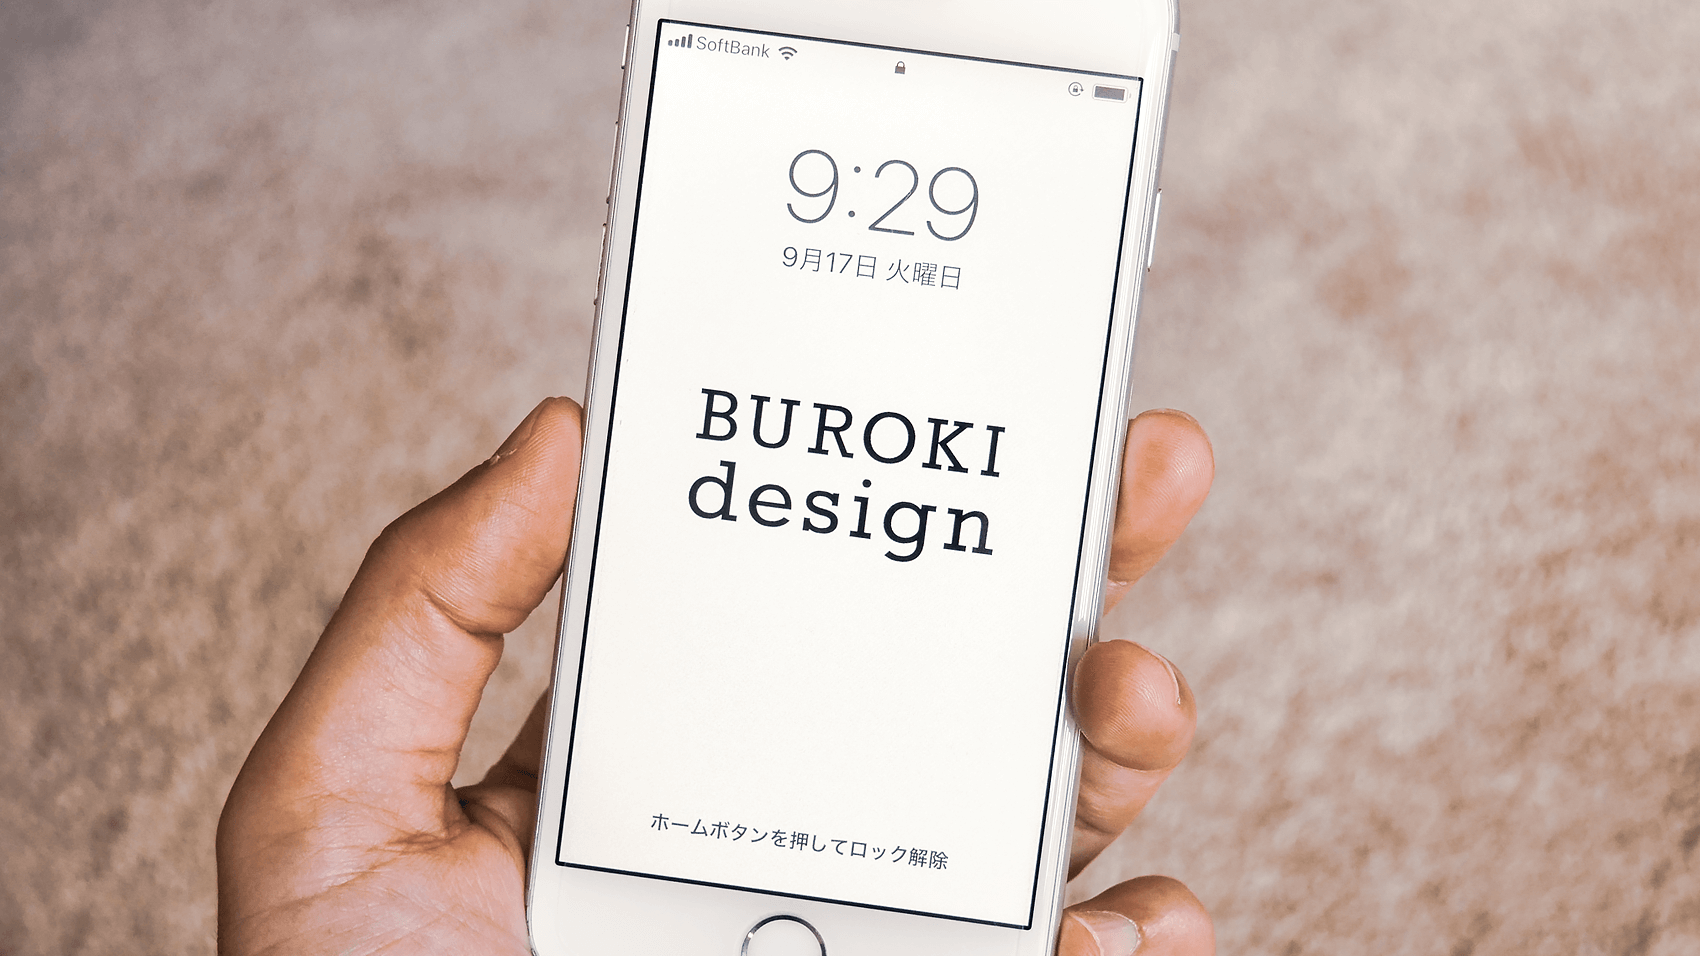 BUROKI designのロゴ壁紙